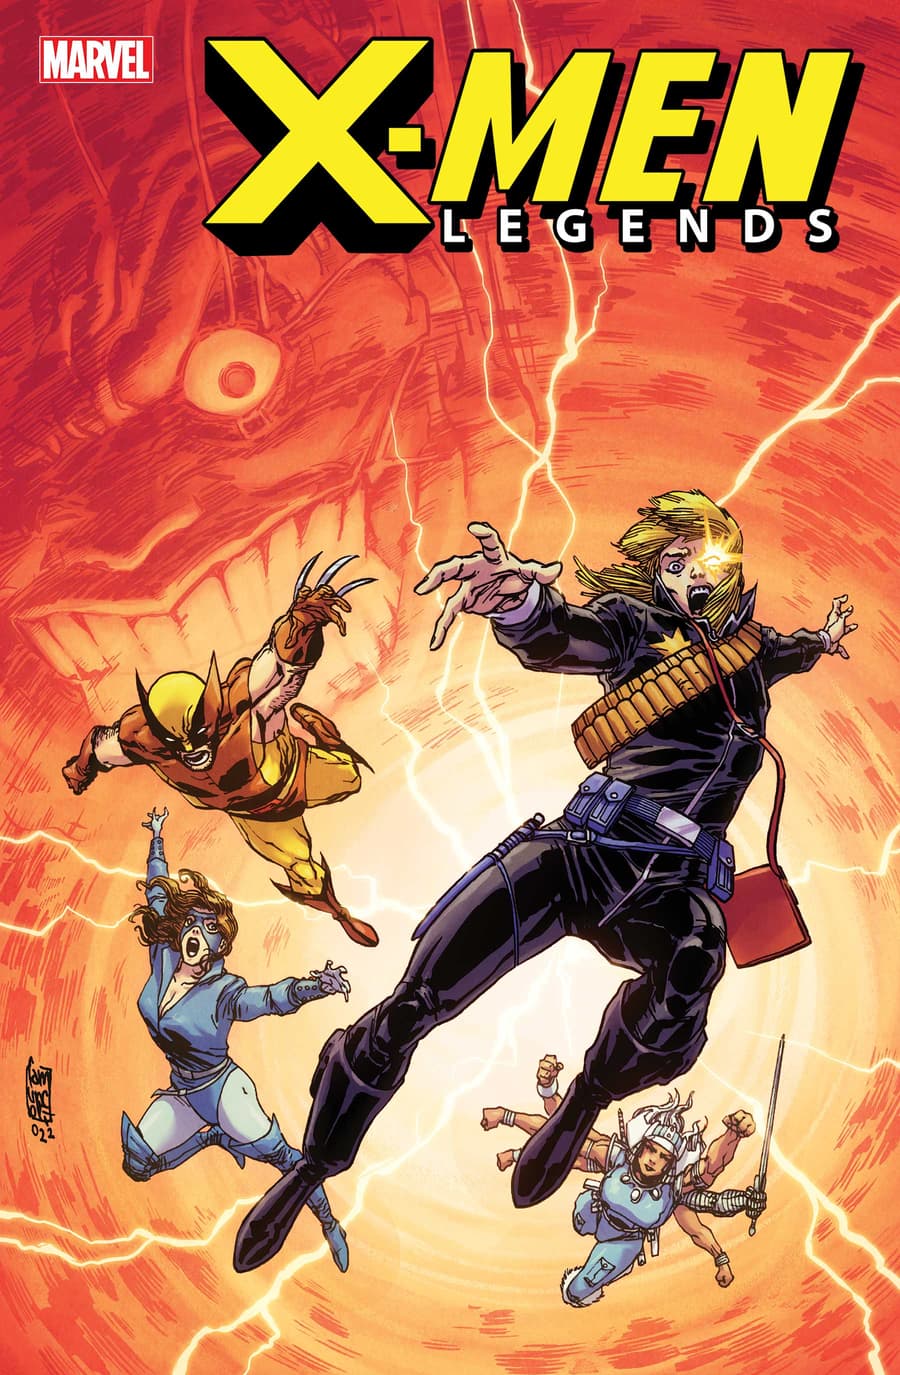 X-Men Legends #3 cover by Giuseppe Camuncoli